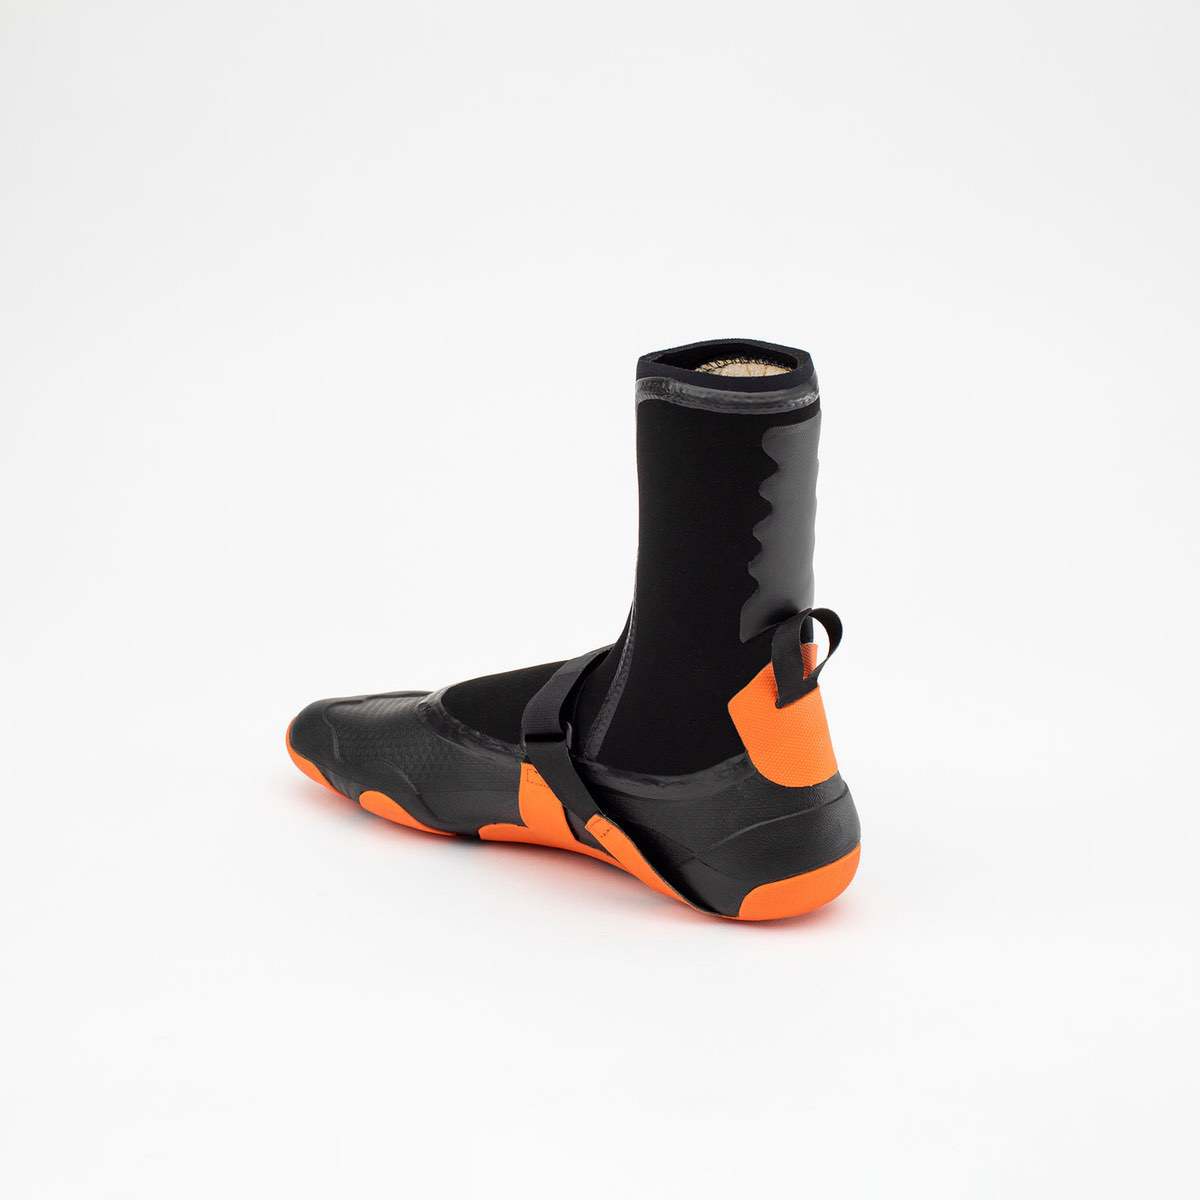 
                  
                    Booties 5mm SOLITE Custom Pro 2.0 (Orange/Black) Includes Heat Booster Socks
                  
                